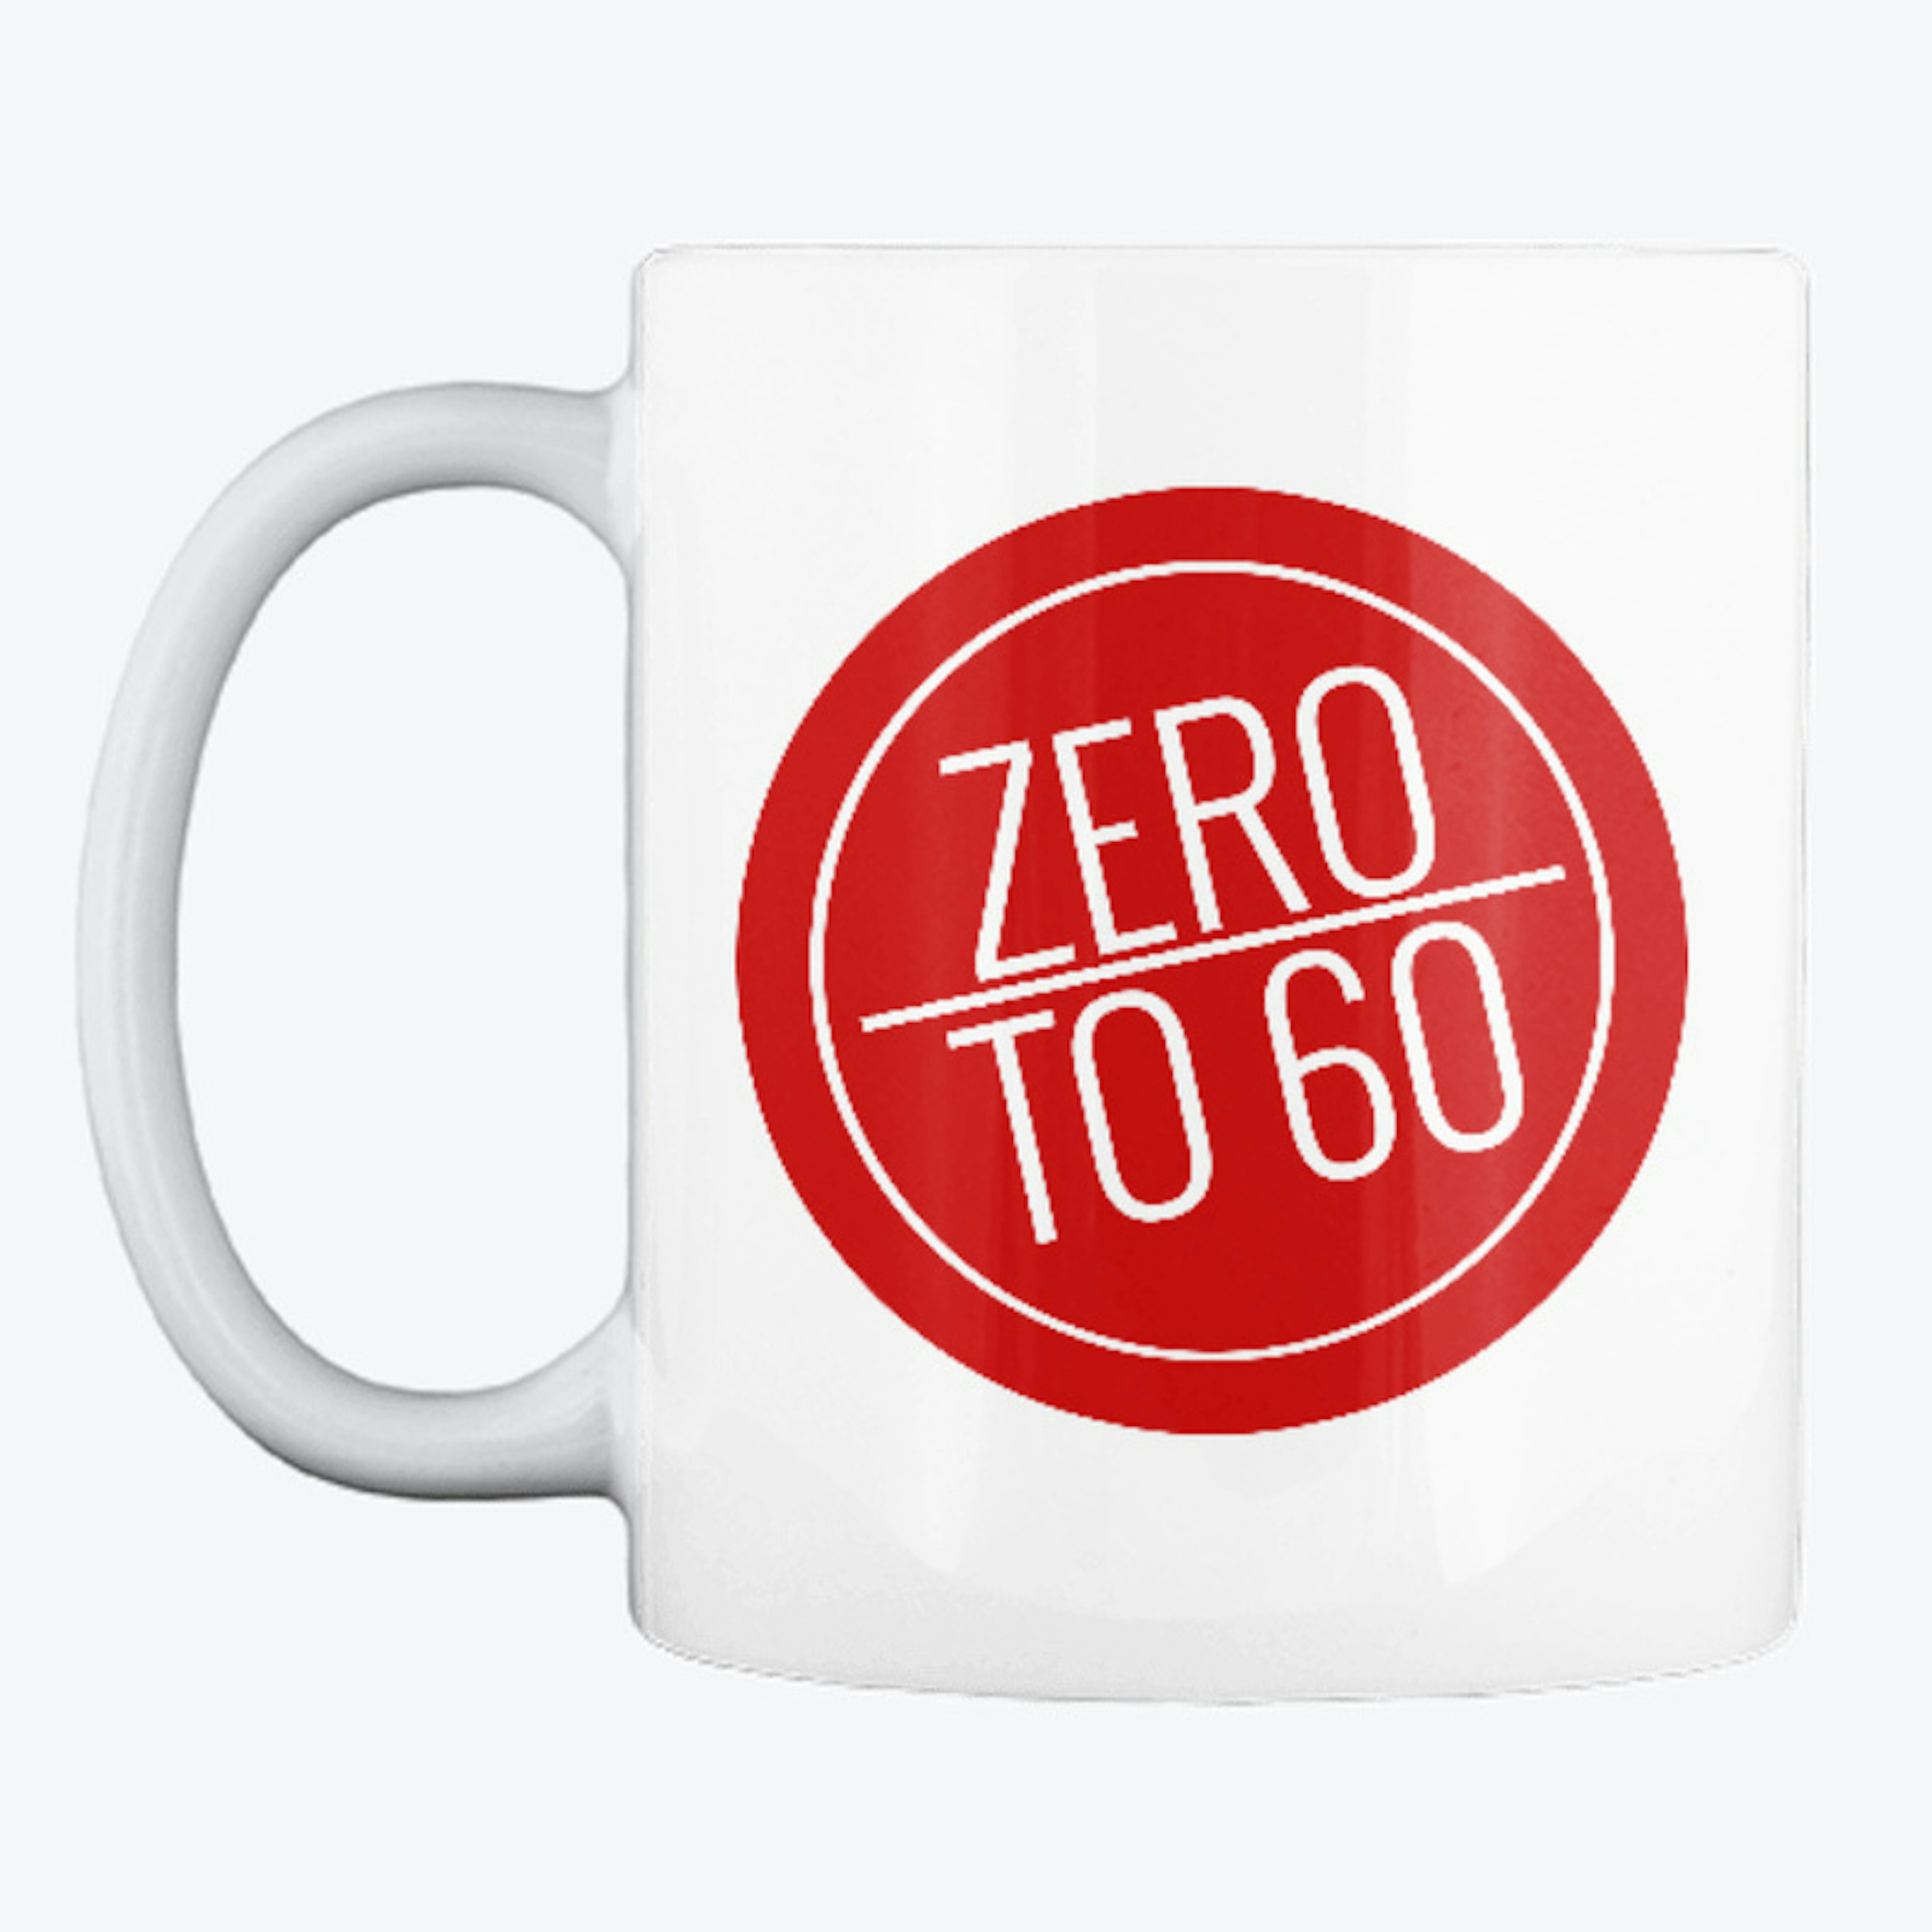 ZeroTo60 Mug